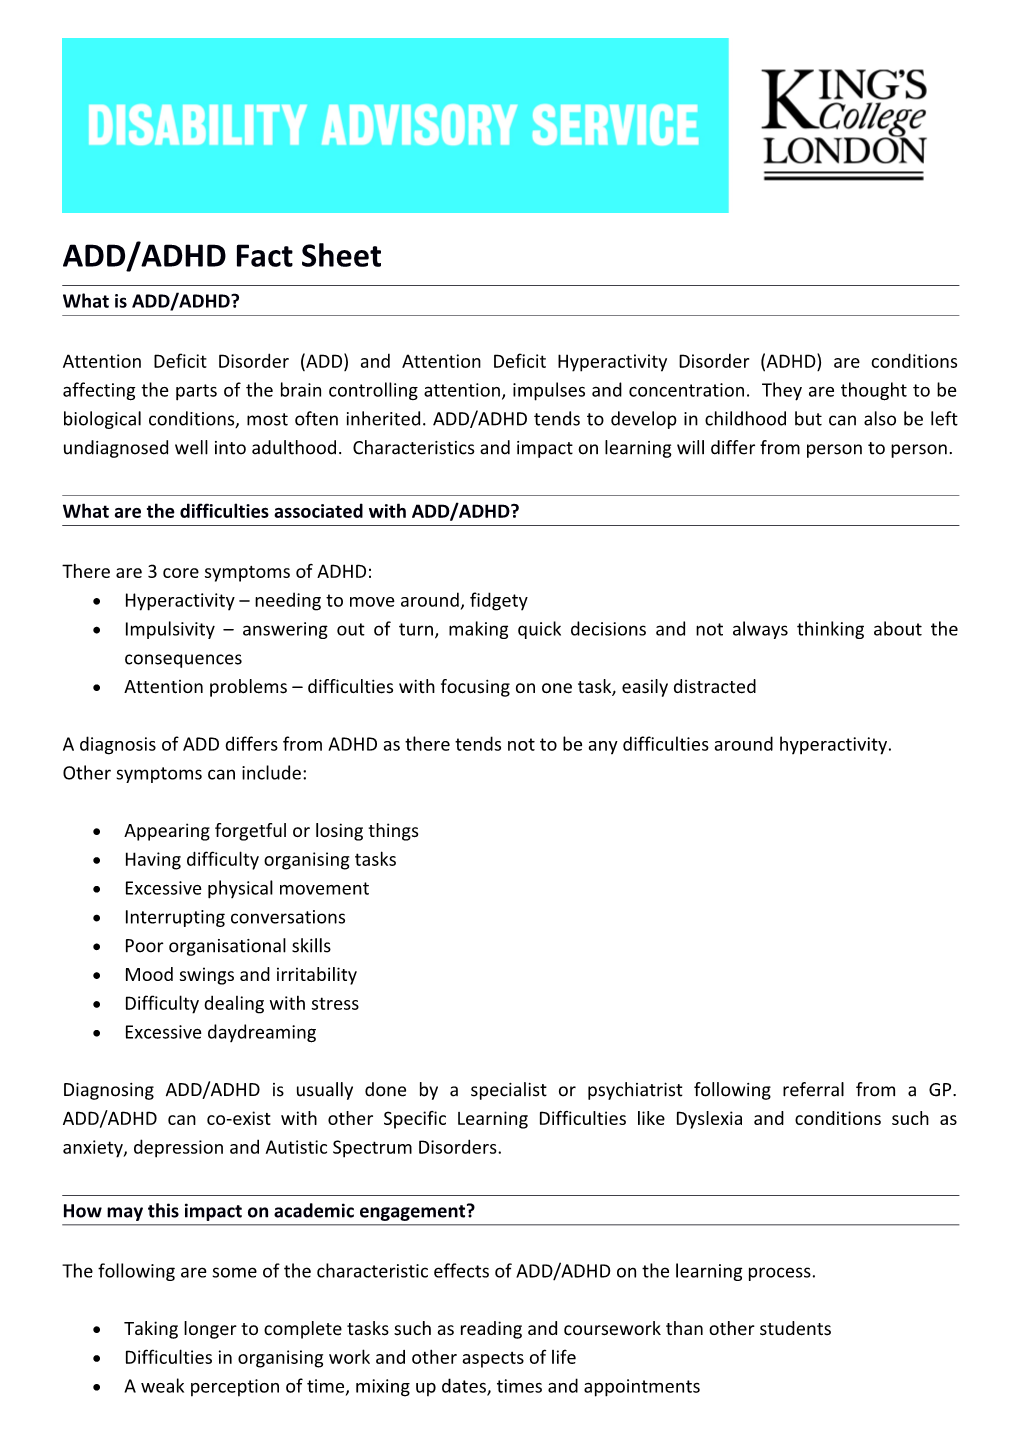 ADD/ADHD Fact Sheet